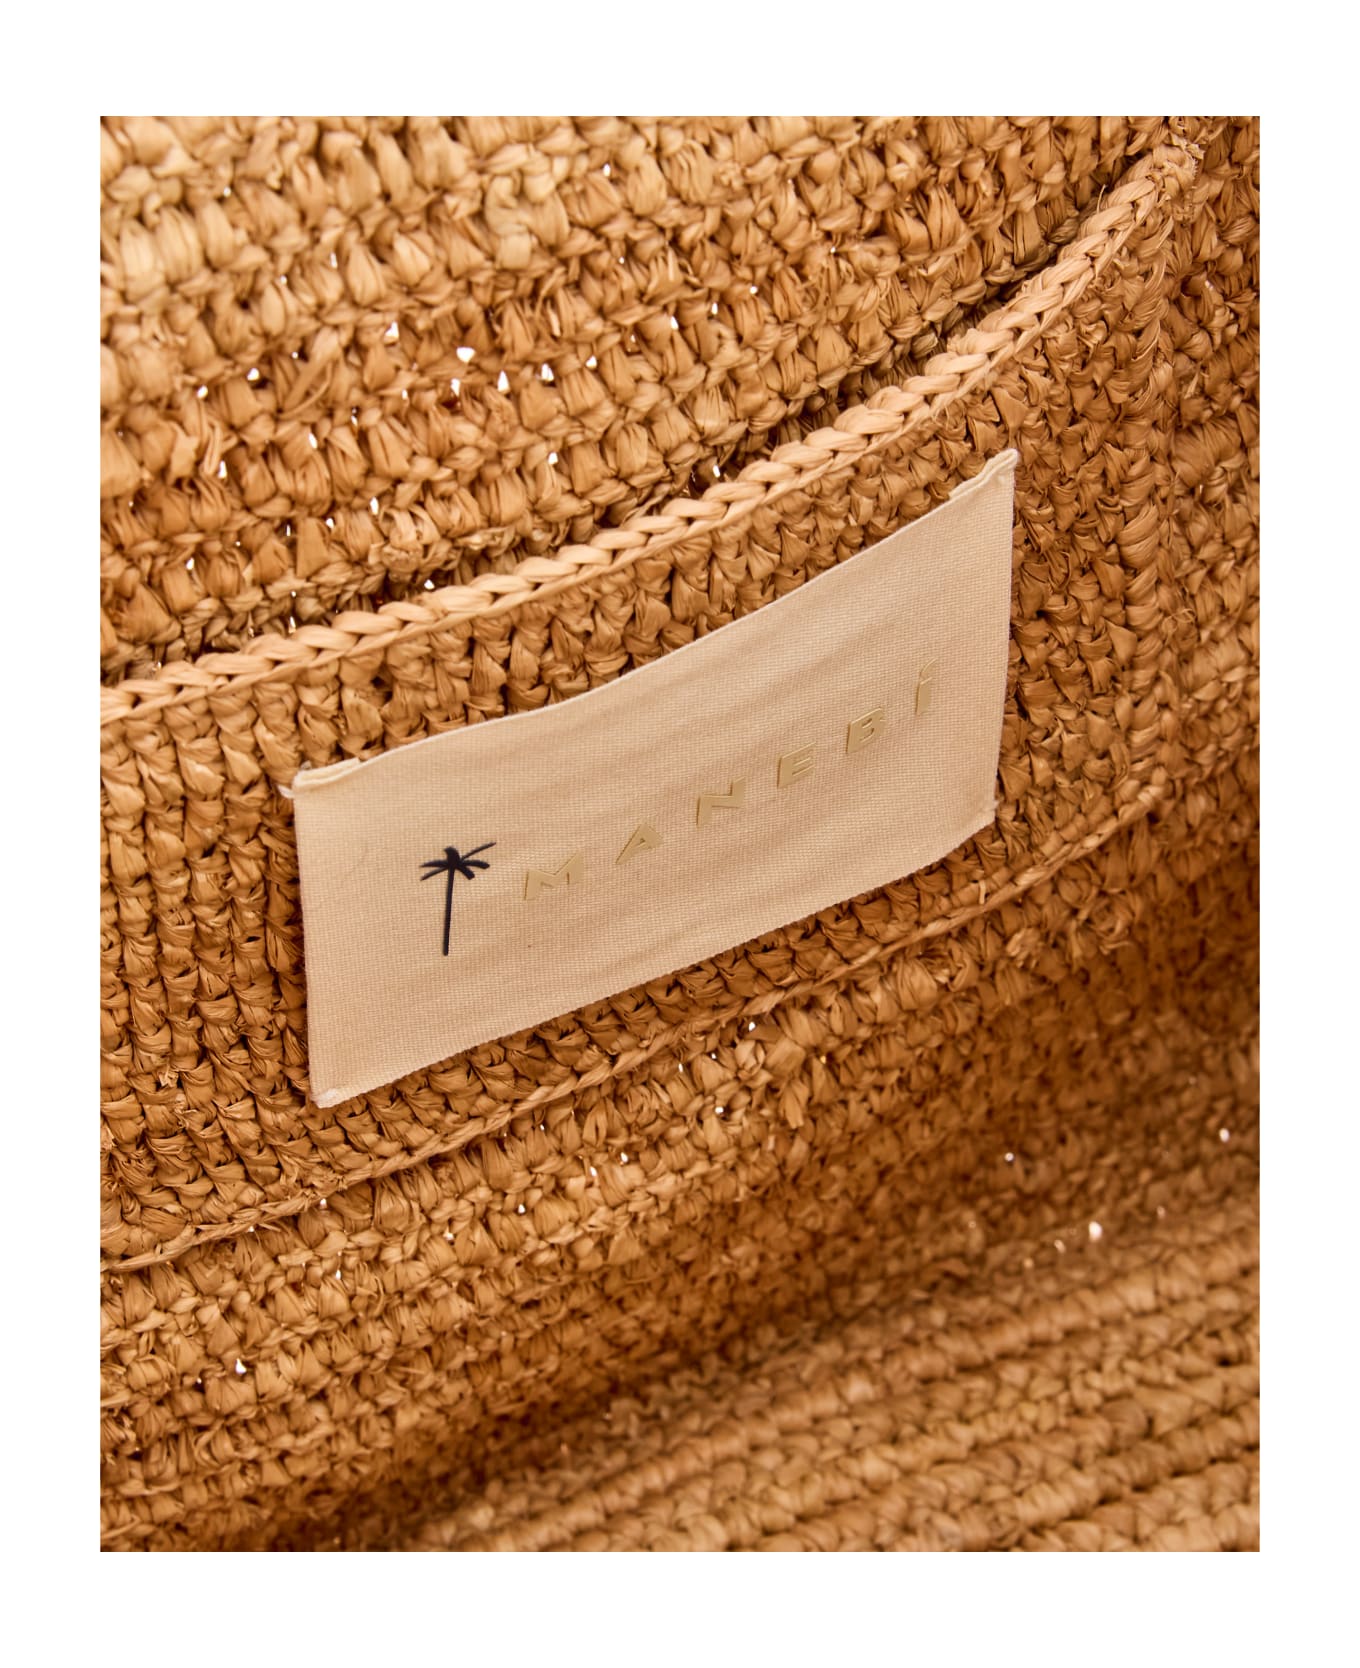 Manebi Squared Raffia Tote Bag W/palm Detail - Brown